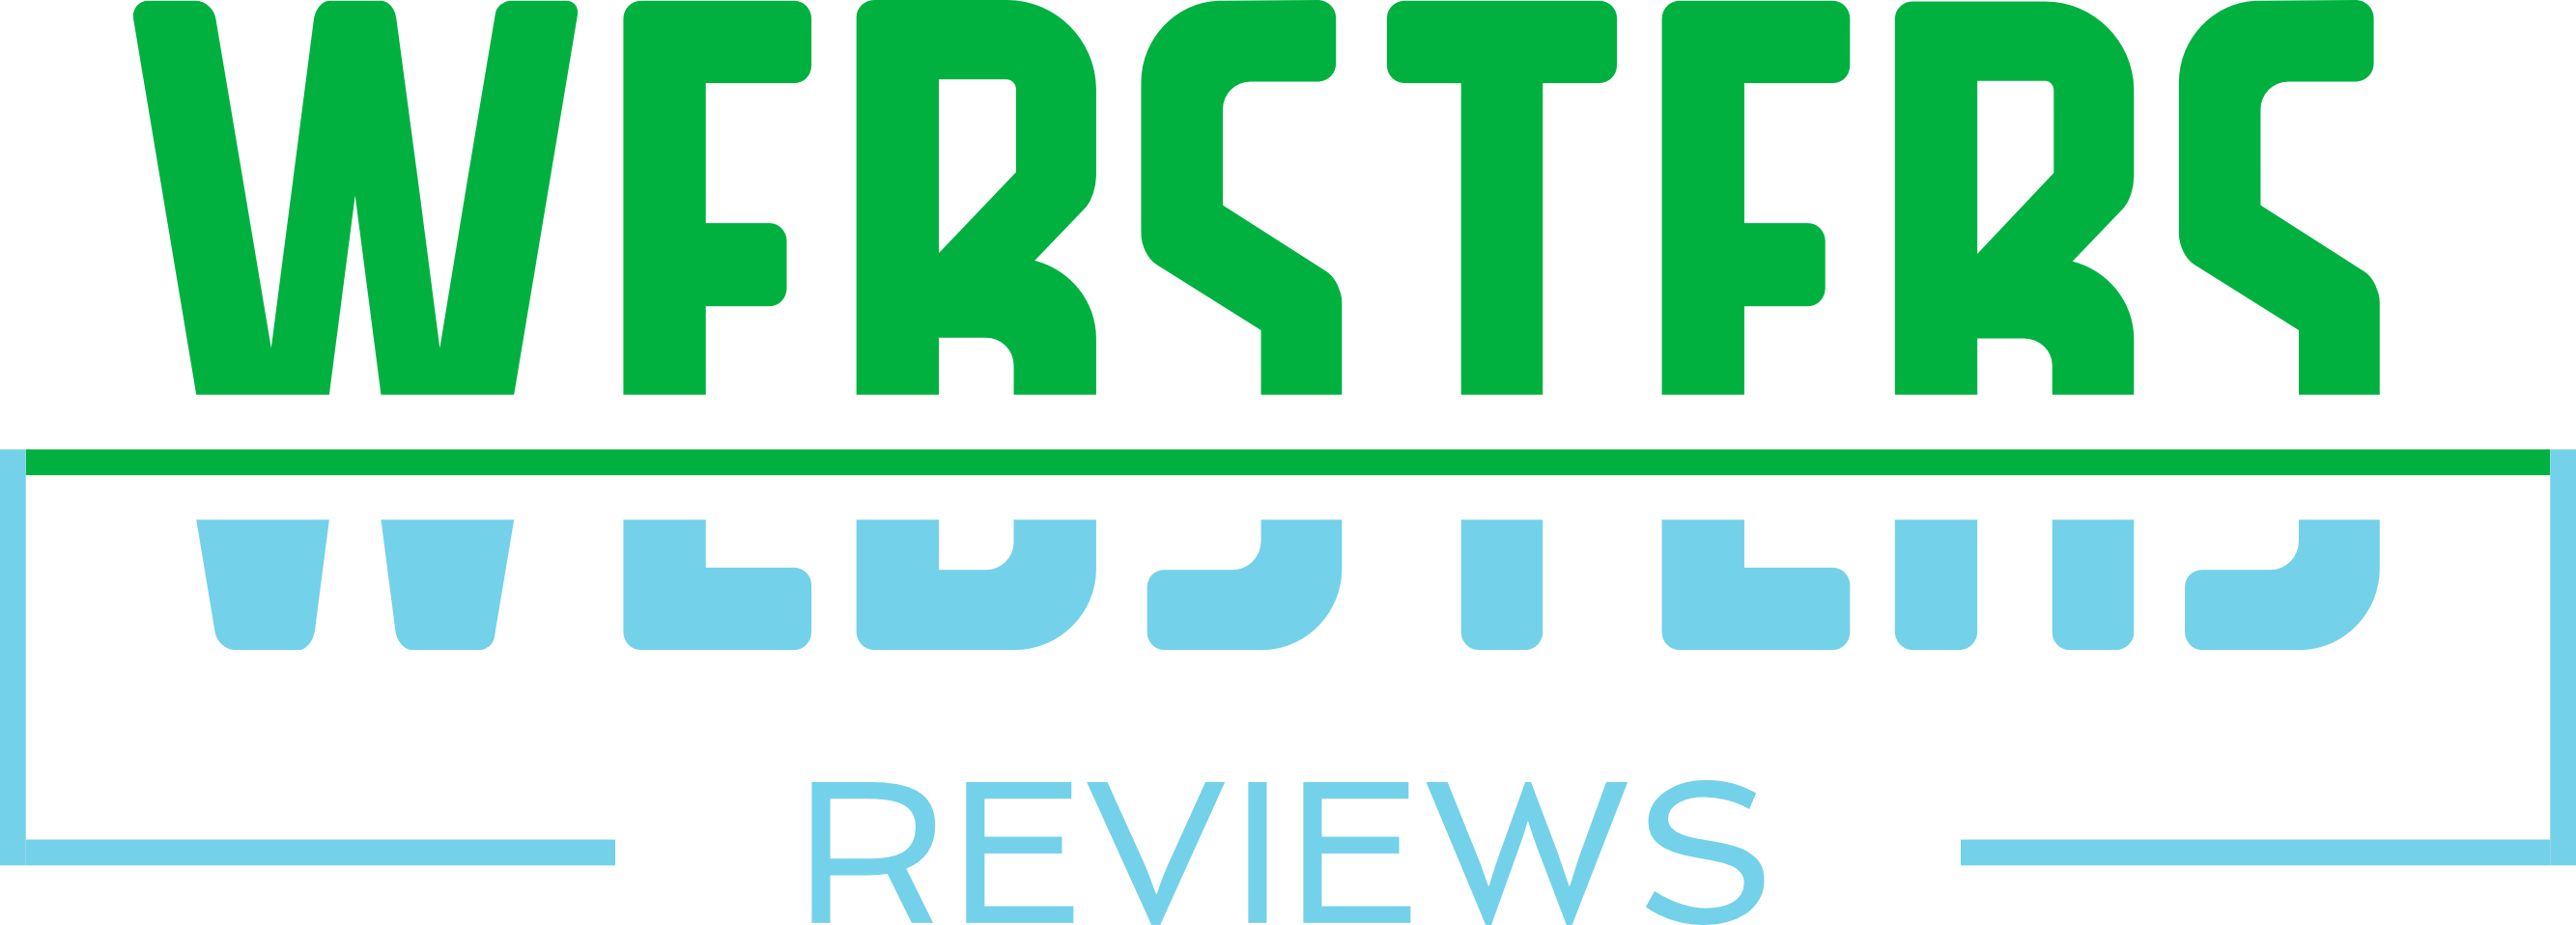 Websters Reviews